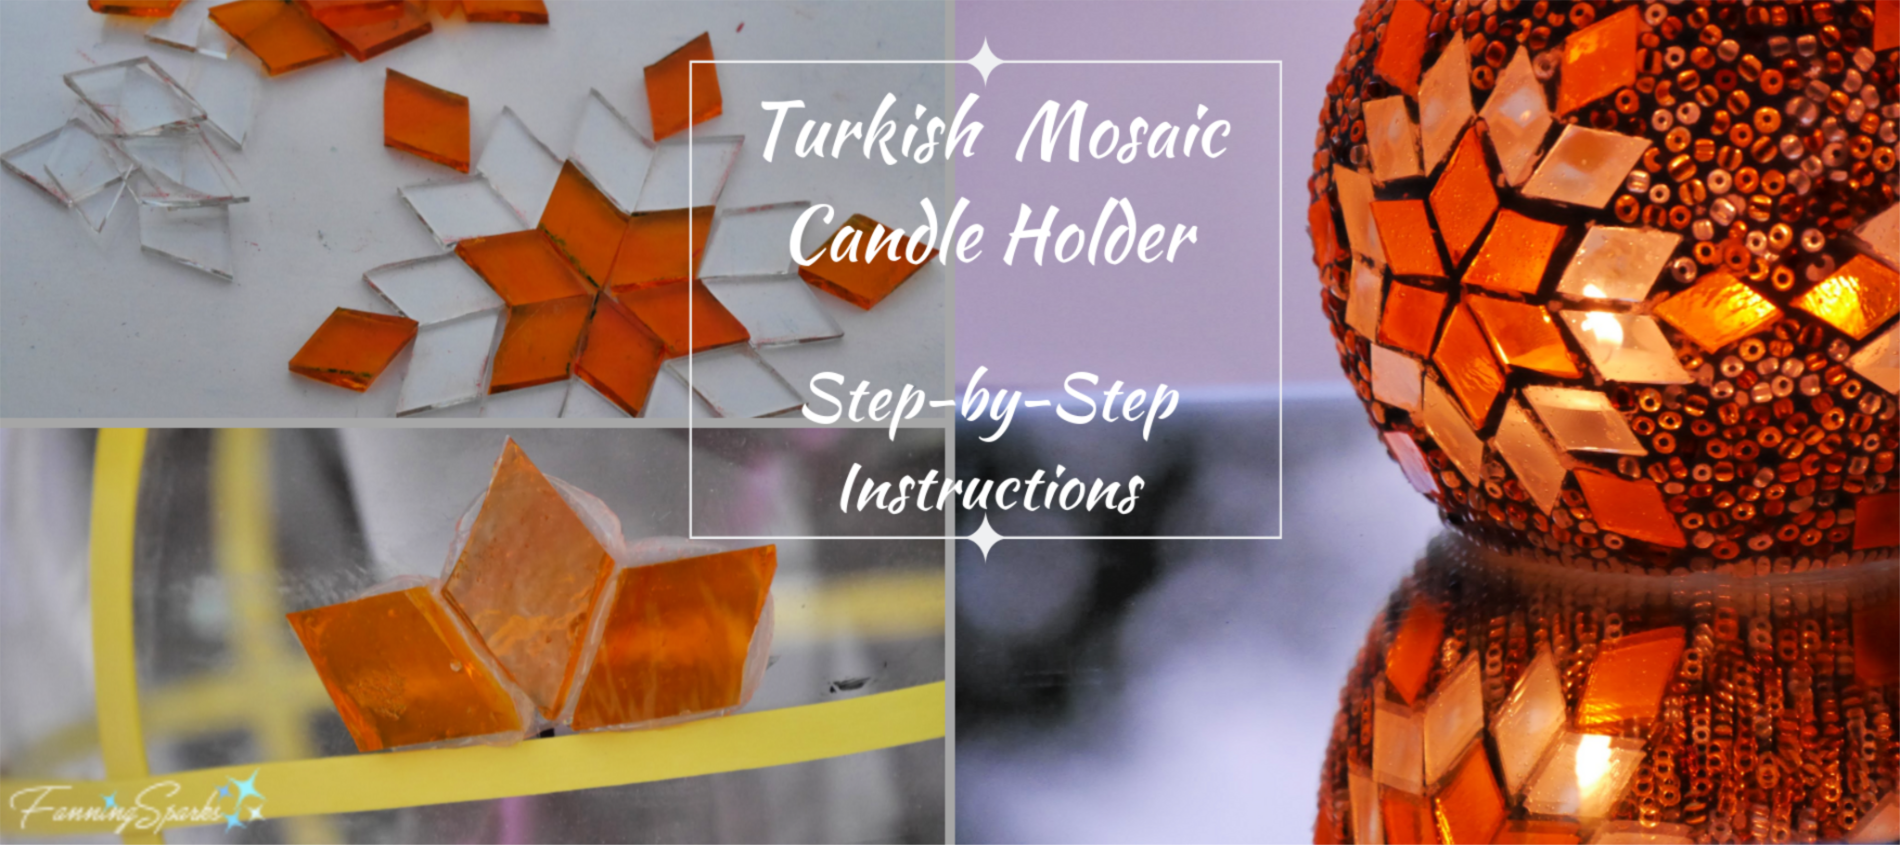 https://fanningsparks.com/wp-content/uploads/2019/09/Turkish-Mosaic-Candle-Holder-Tutorial-fea-3.png